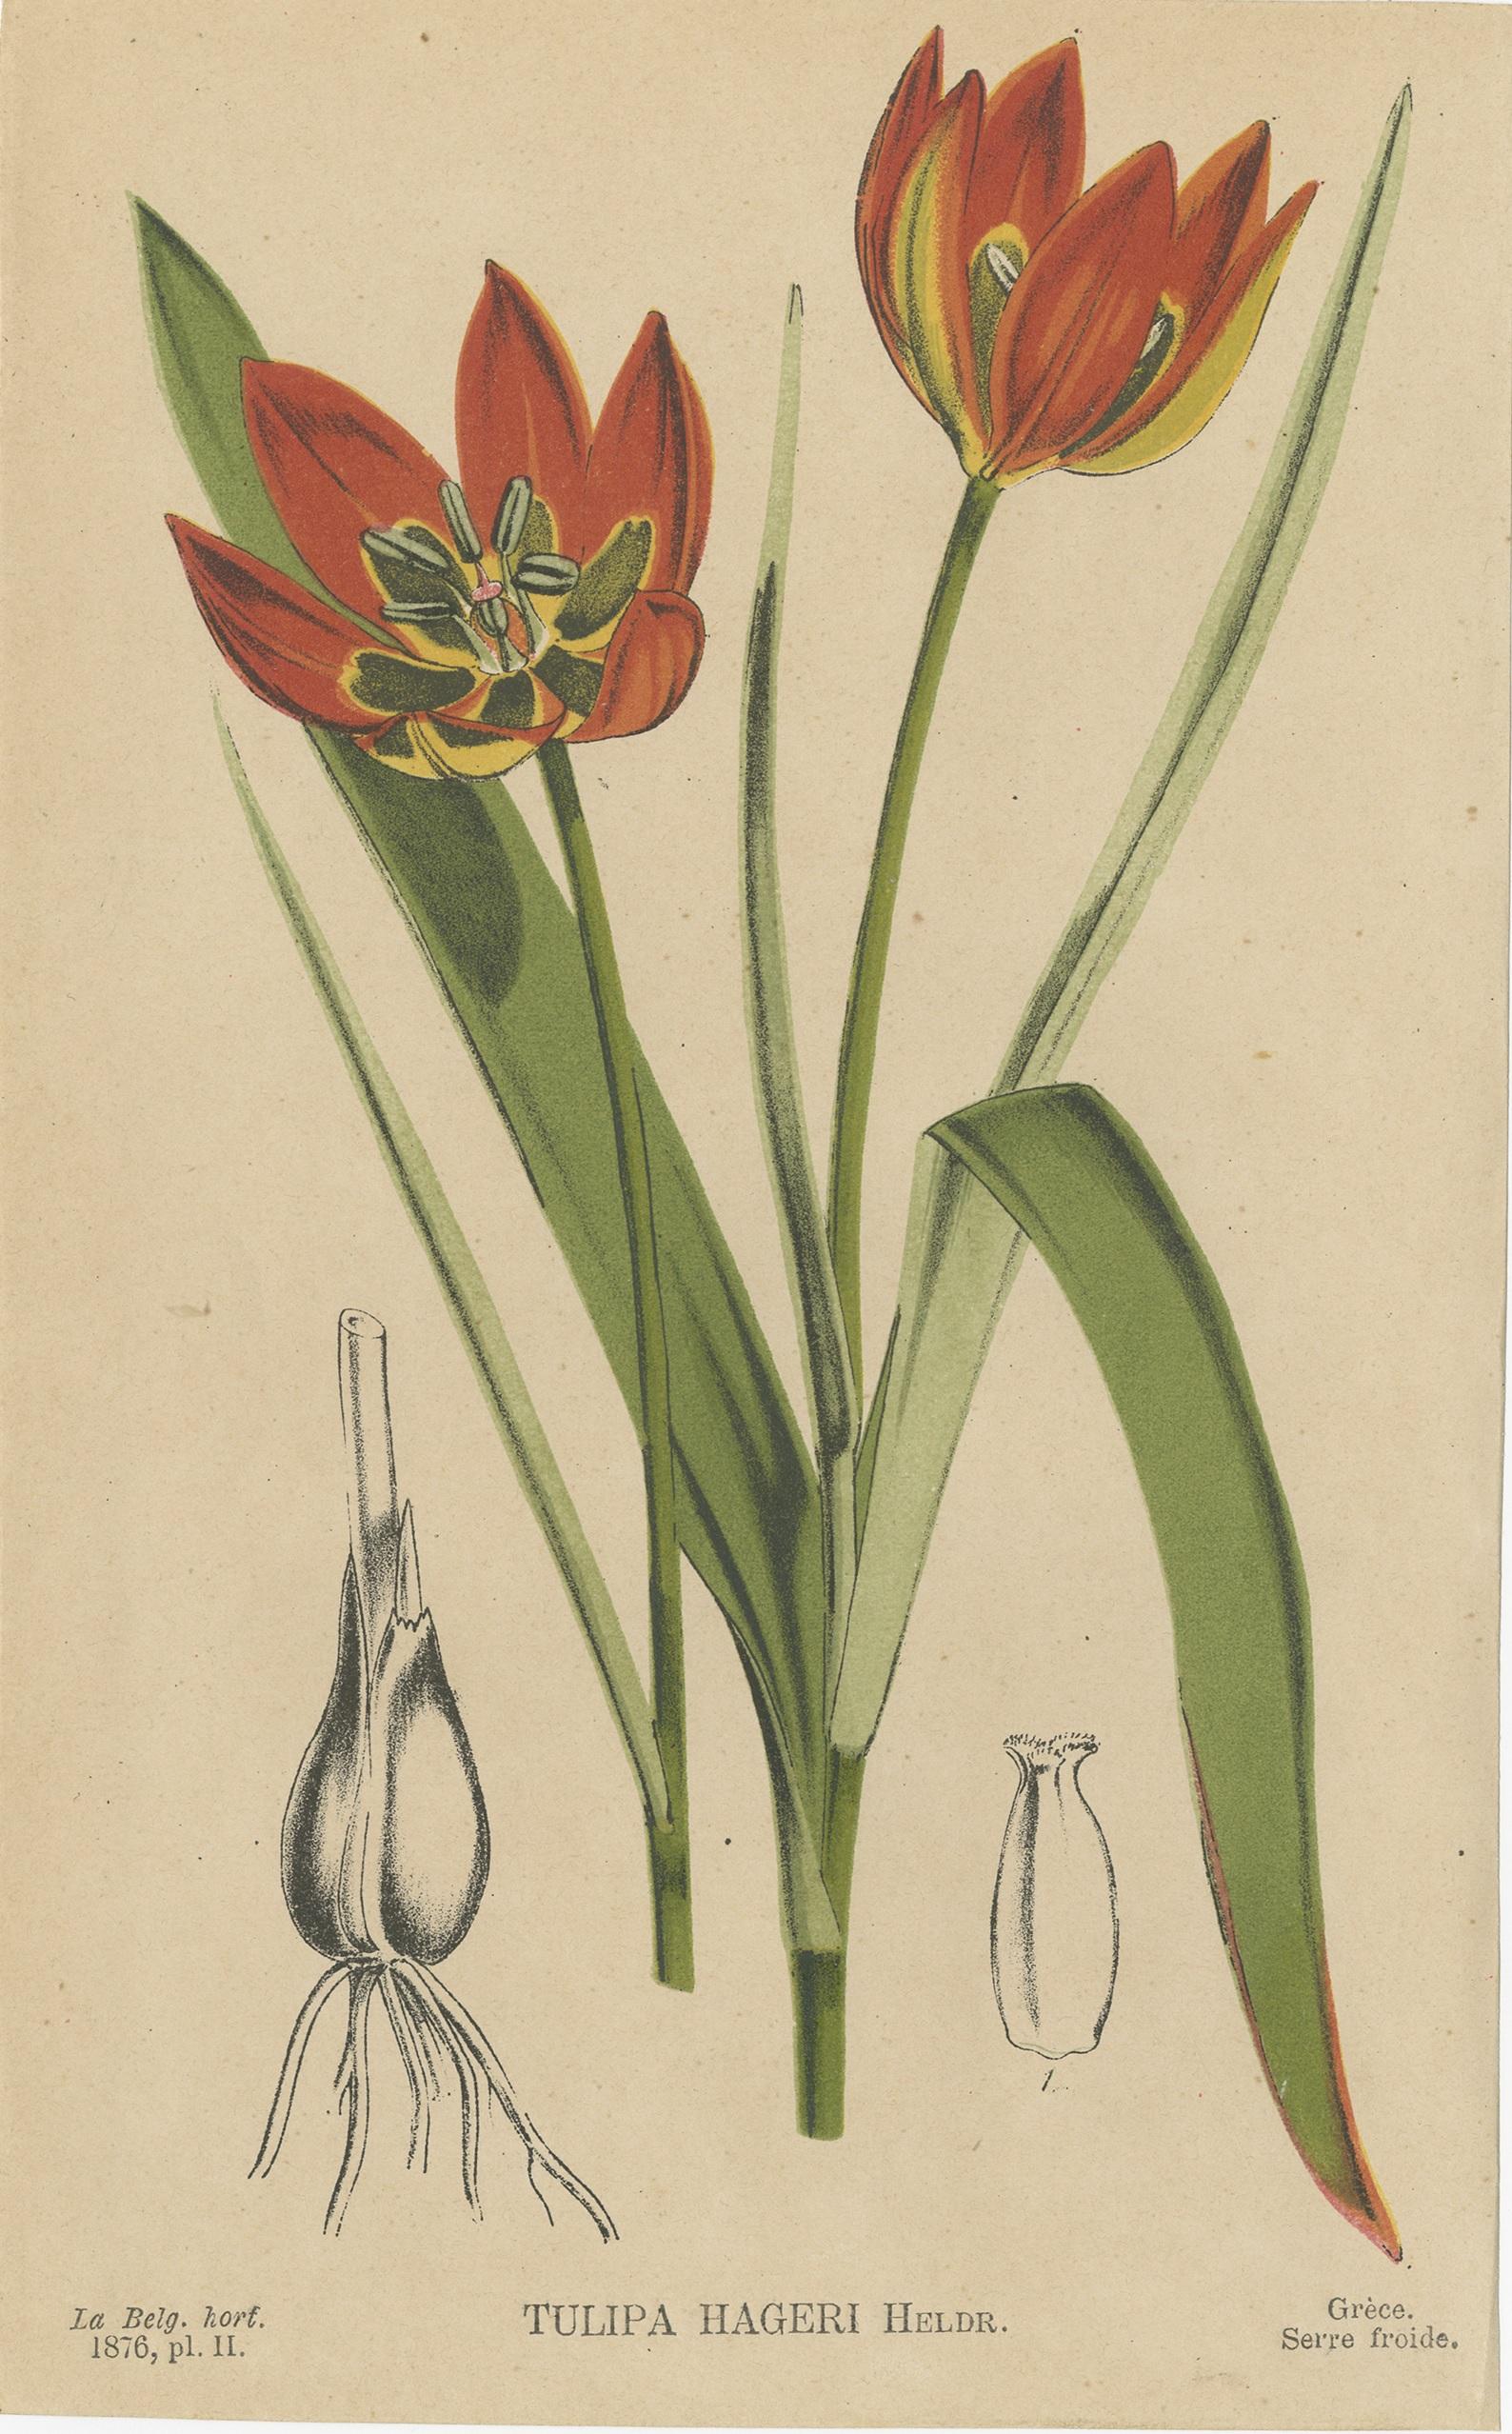 Antique print titled 'Tulipa Hageri'. Lithograph of the Tulipa Hageri, or 'Little Princess' tulip. This print originates from 'La Belgique Horticole' published in 1876.